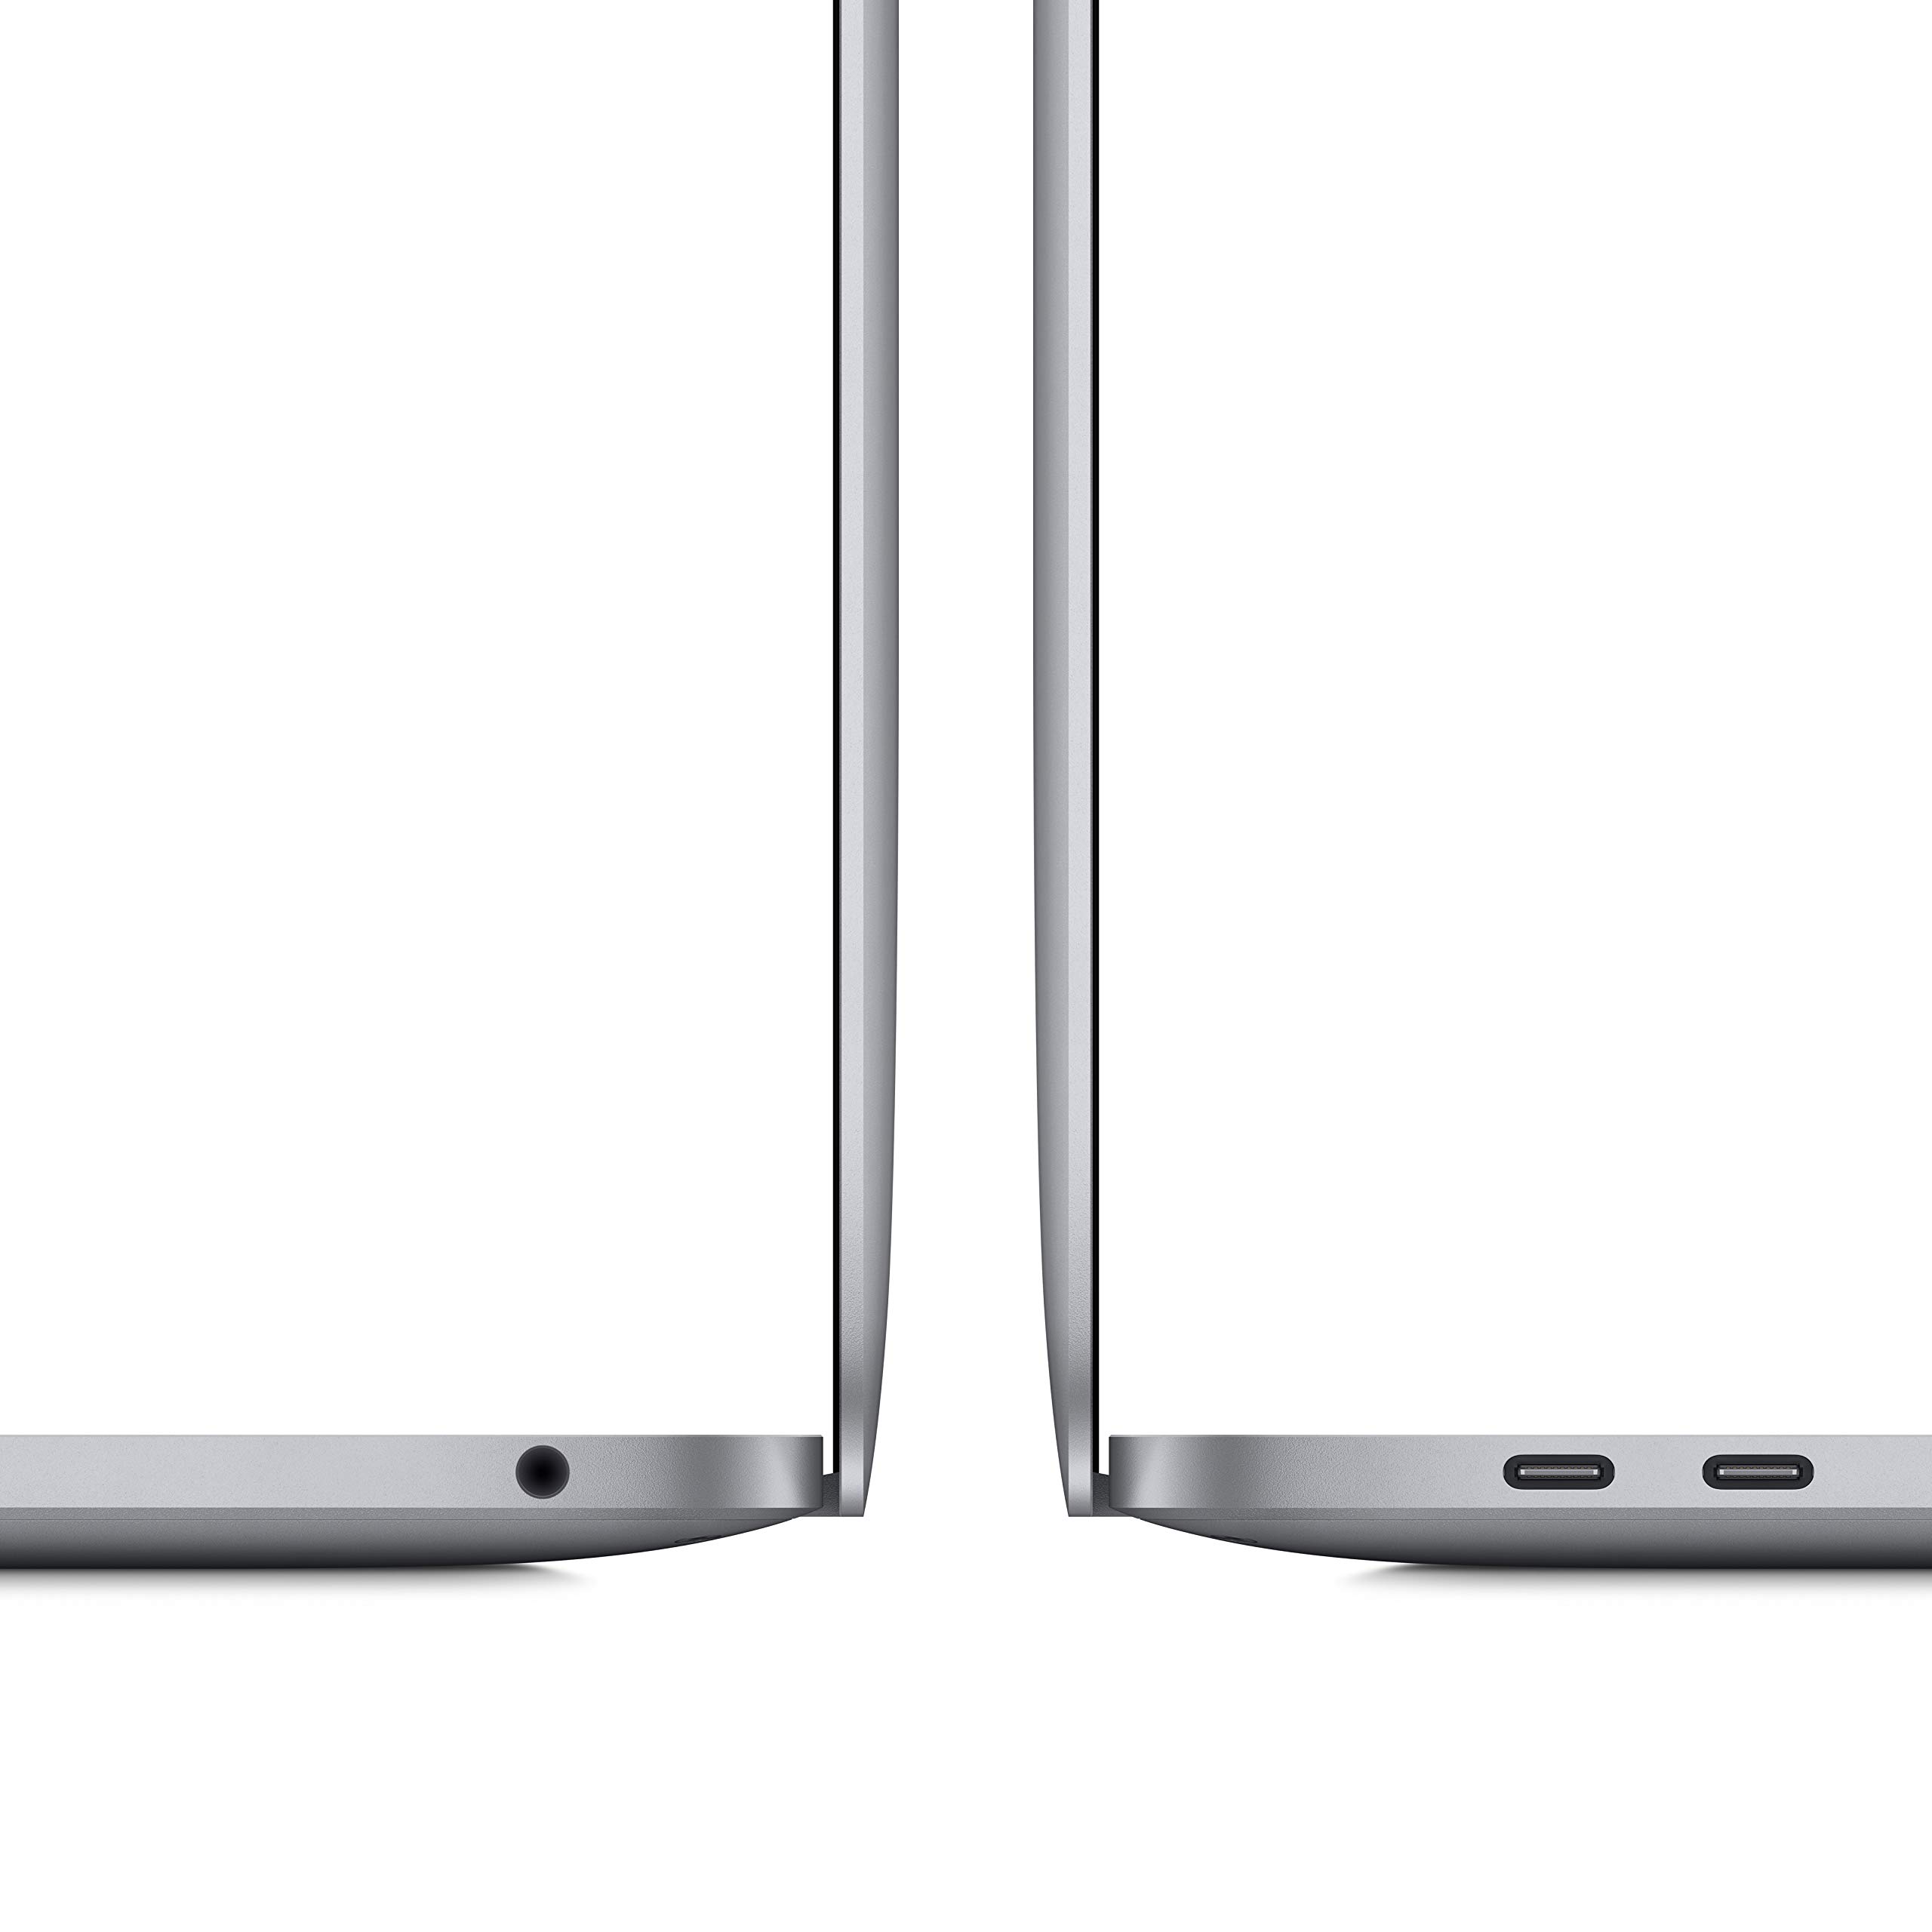 Apple 2020 MacBook Pro M1 Chip (13-inch, 8GB RAM, 512GB SSD Storage) - Space Gray